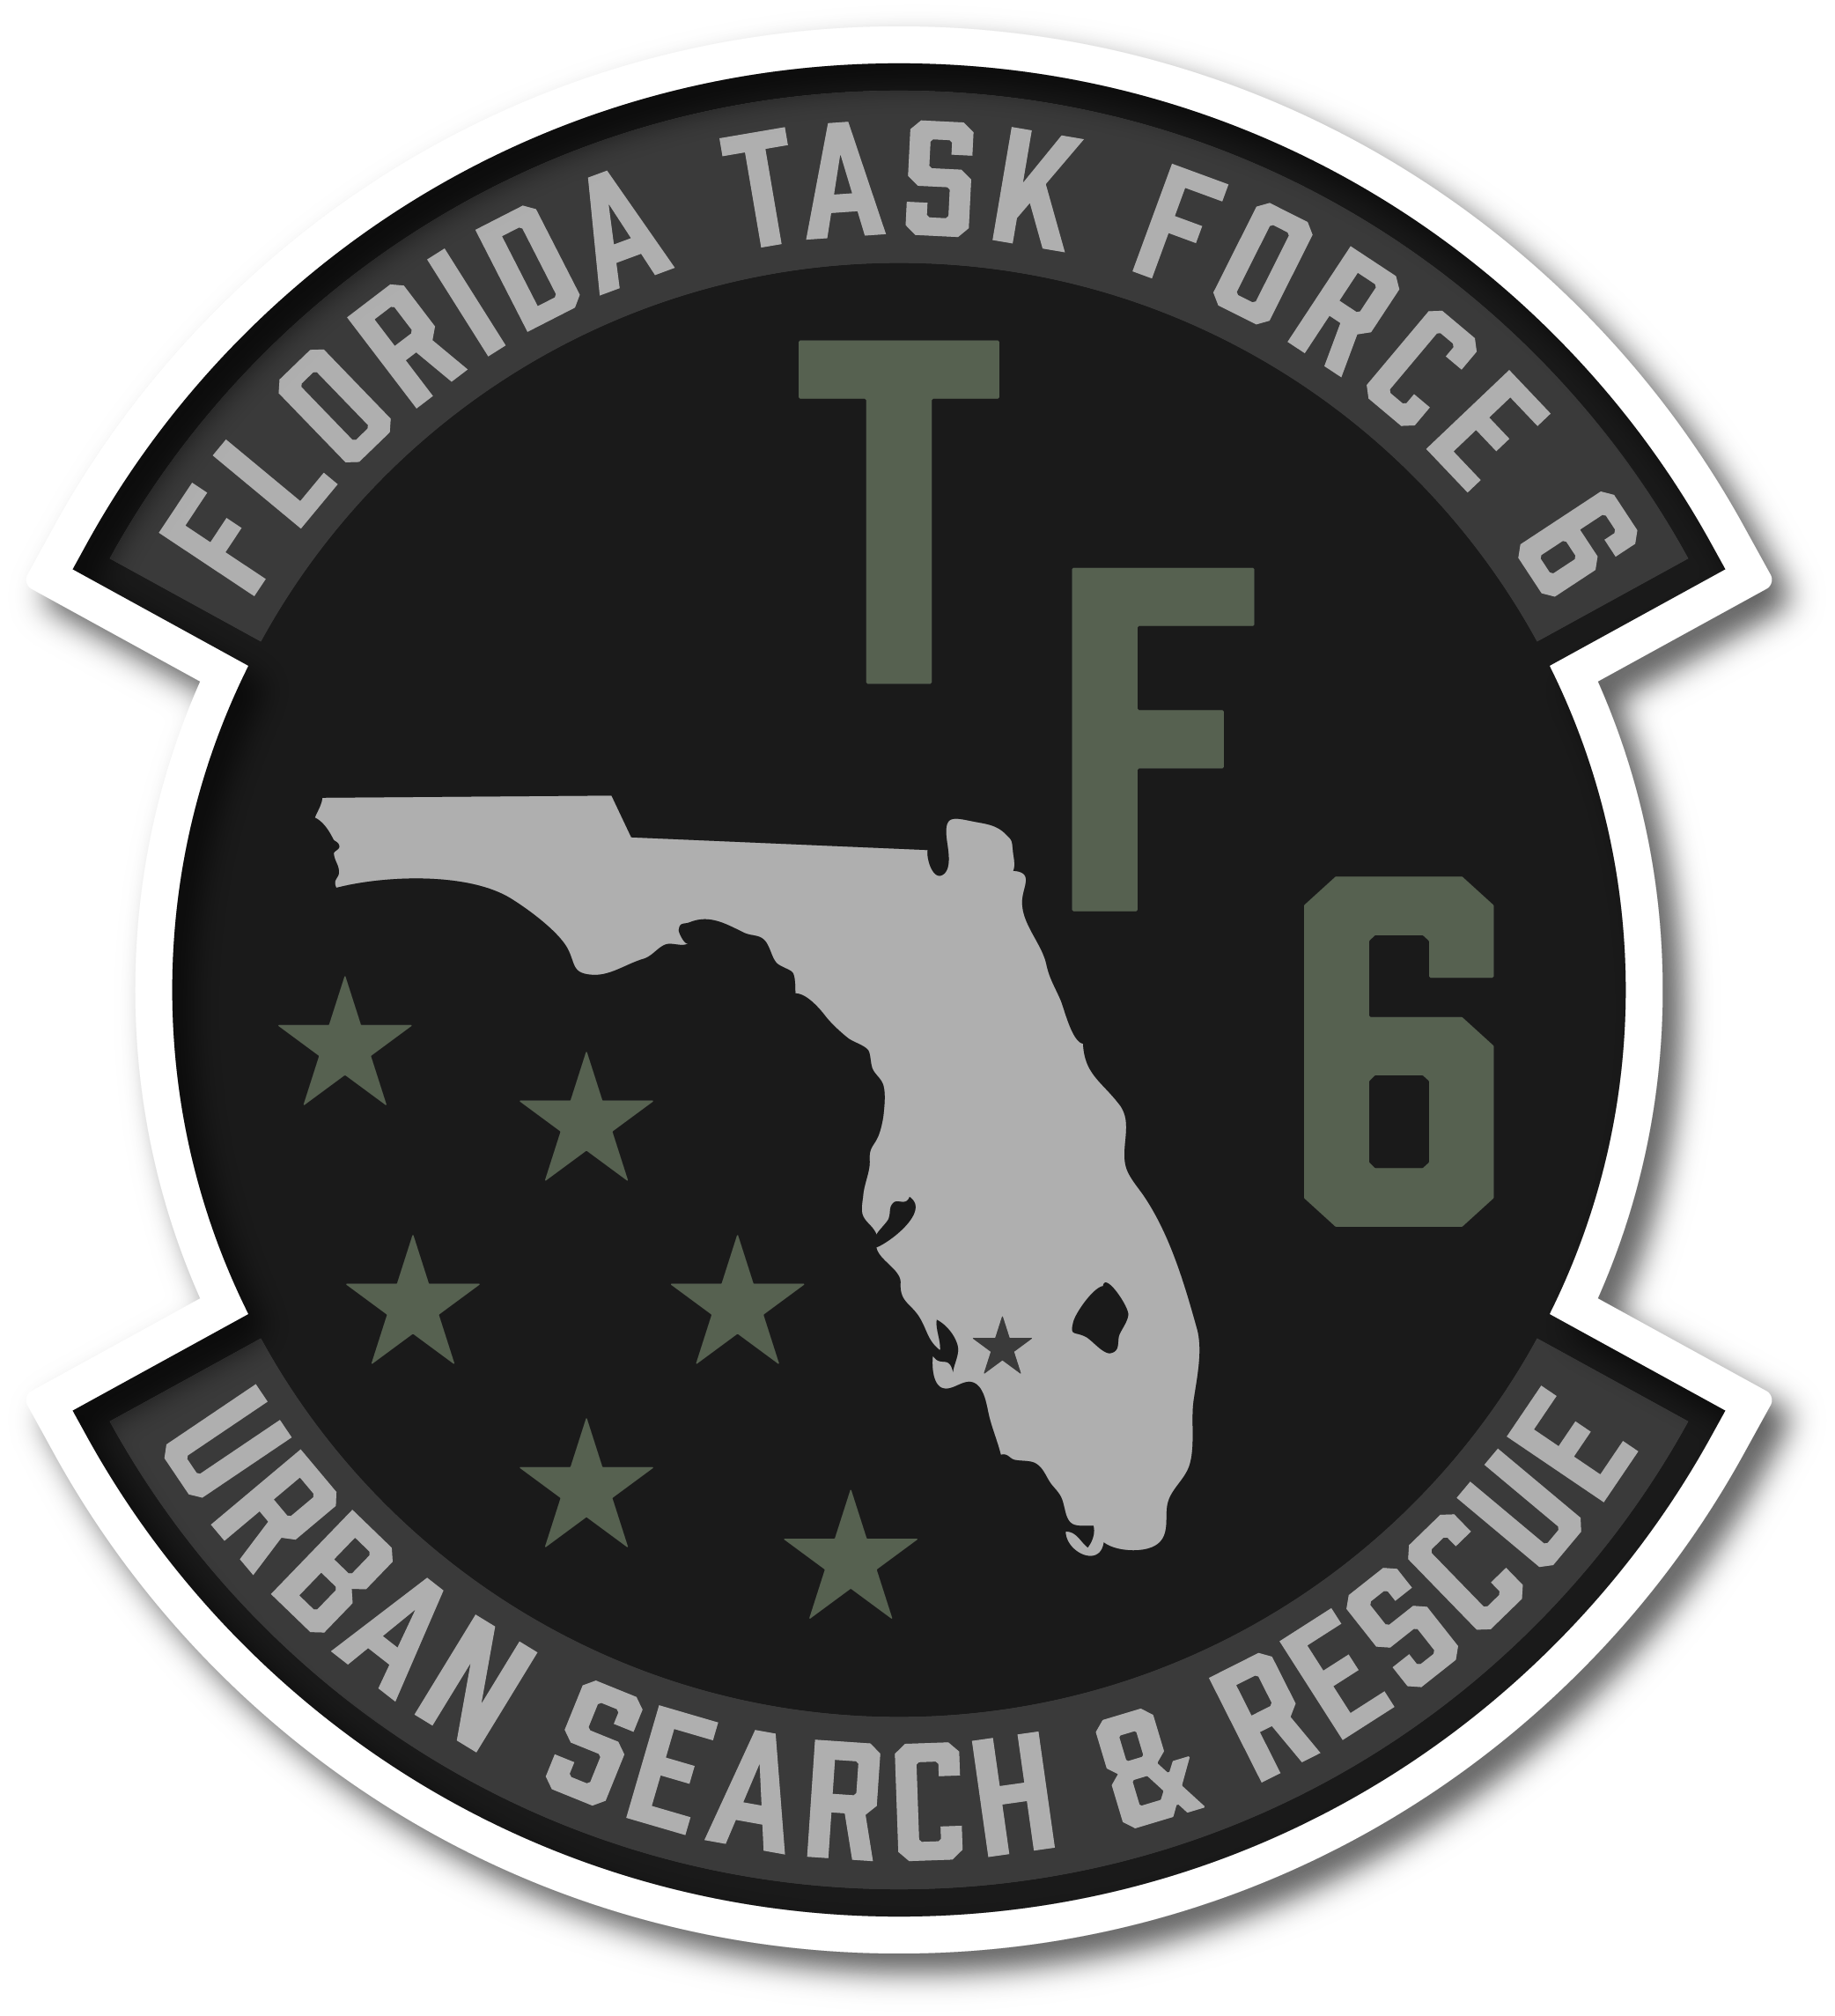 Florida Task Force 6 Helmet/Gear Decal